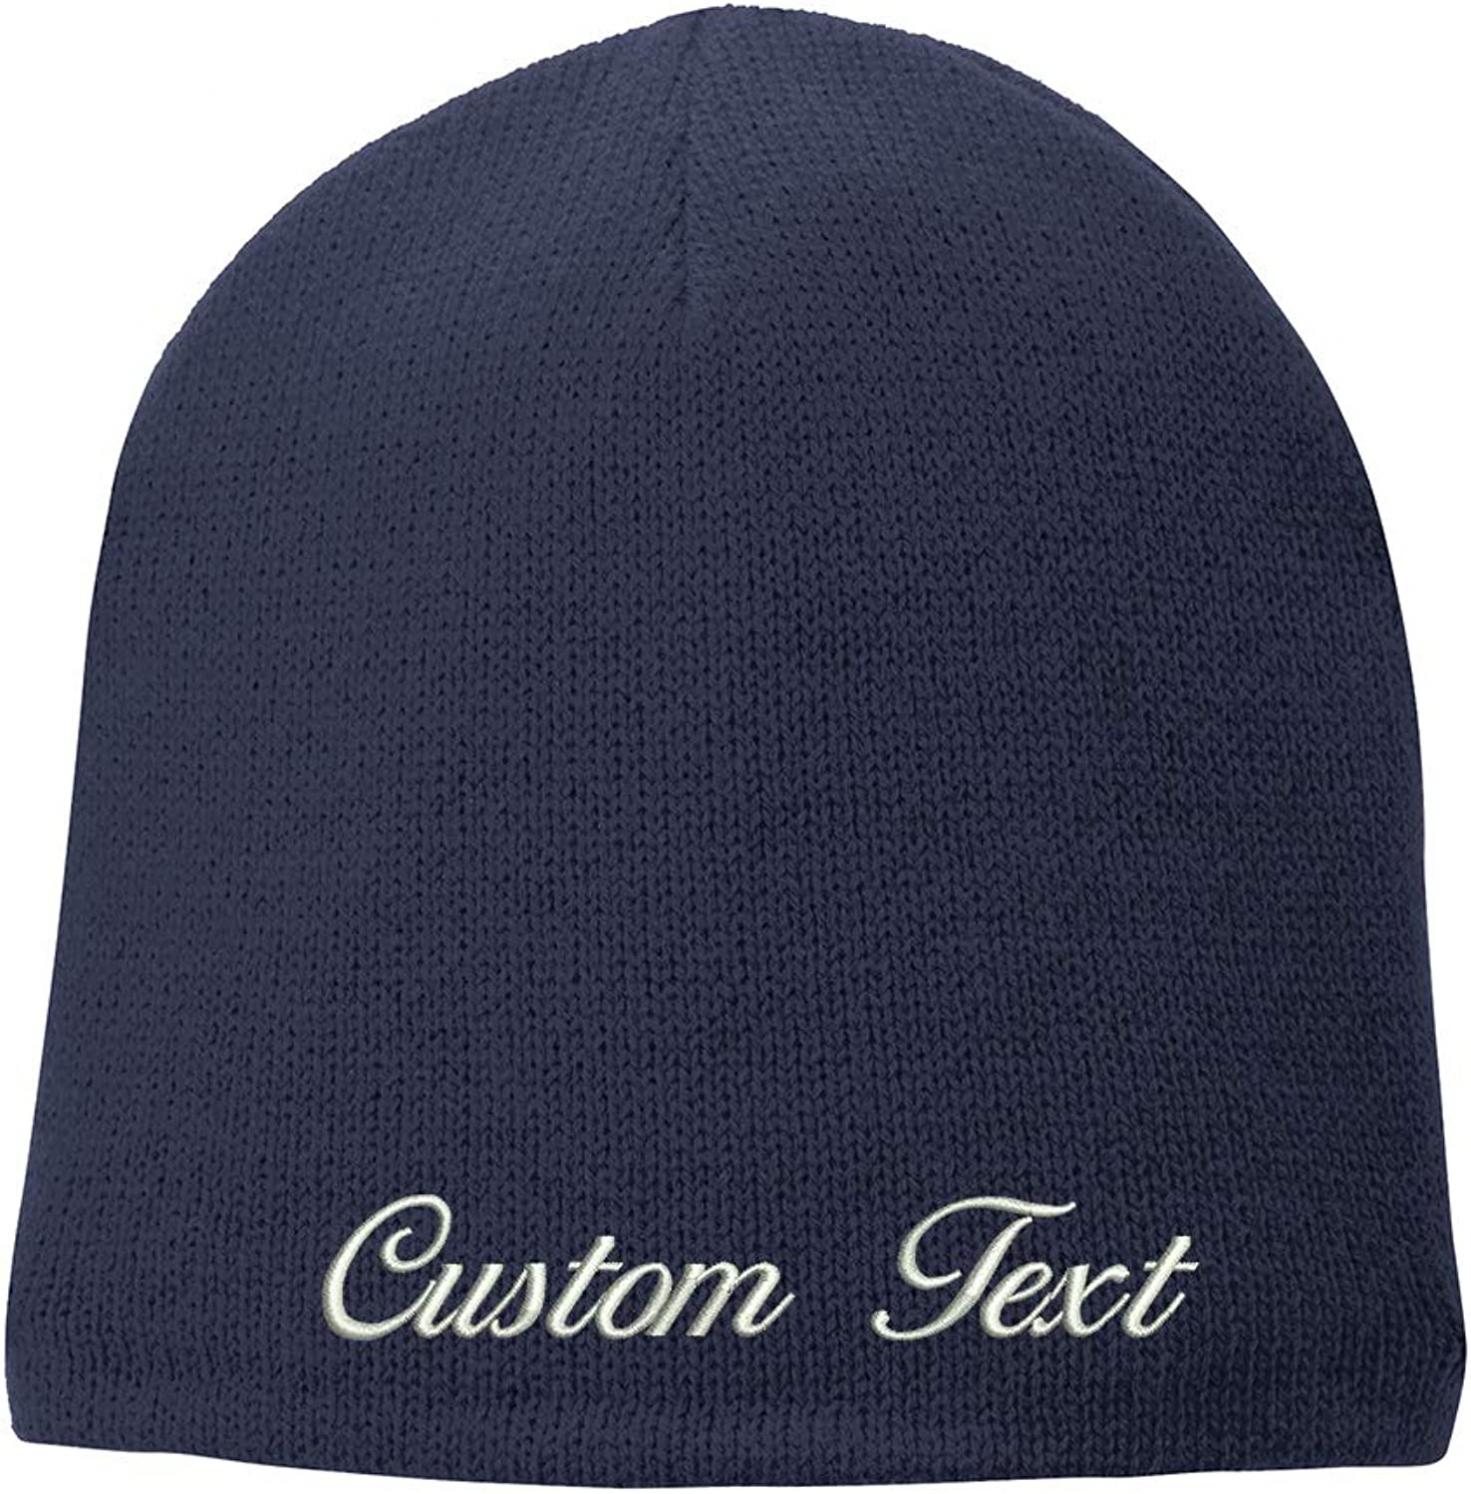 INK STITCH CP91L Custom Text Stitching Design Your Own Fleece Line Beanie Hats